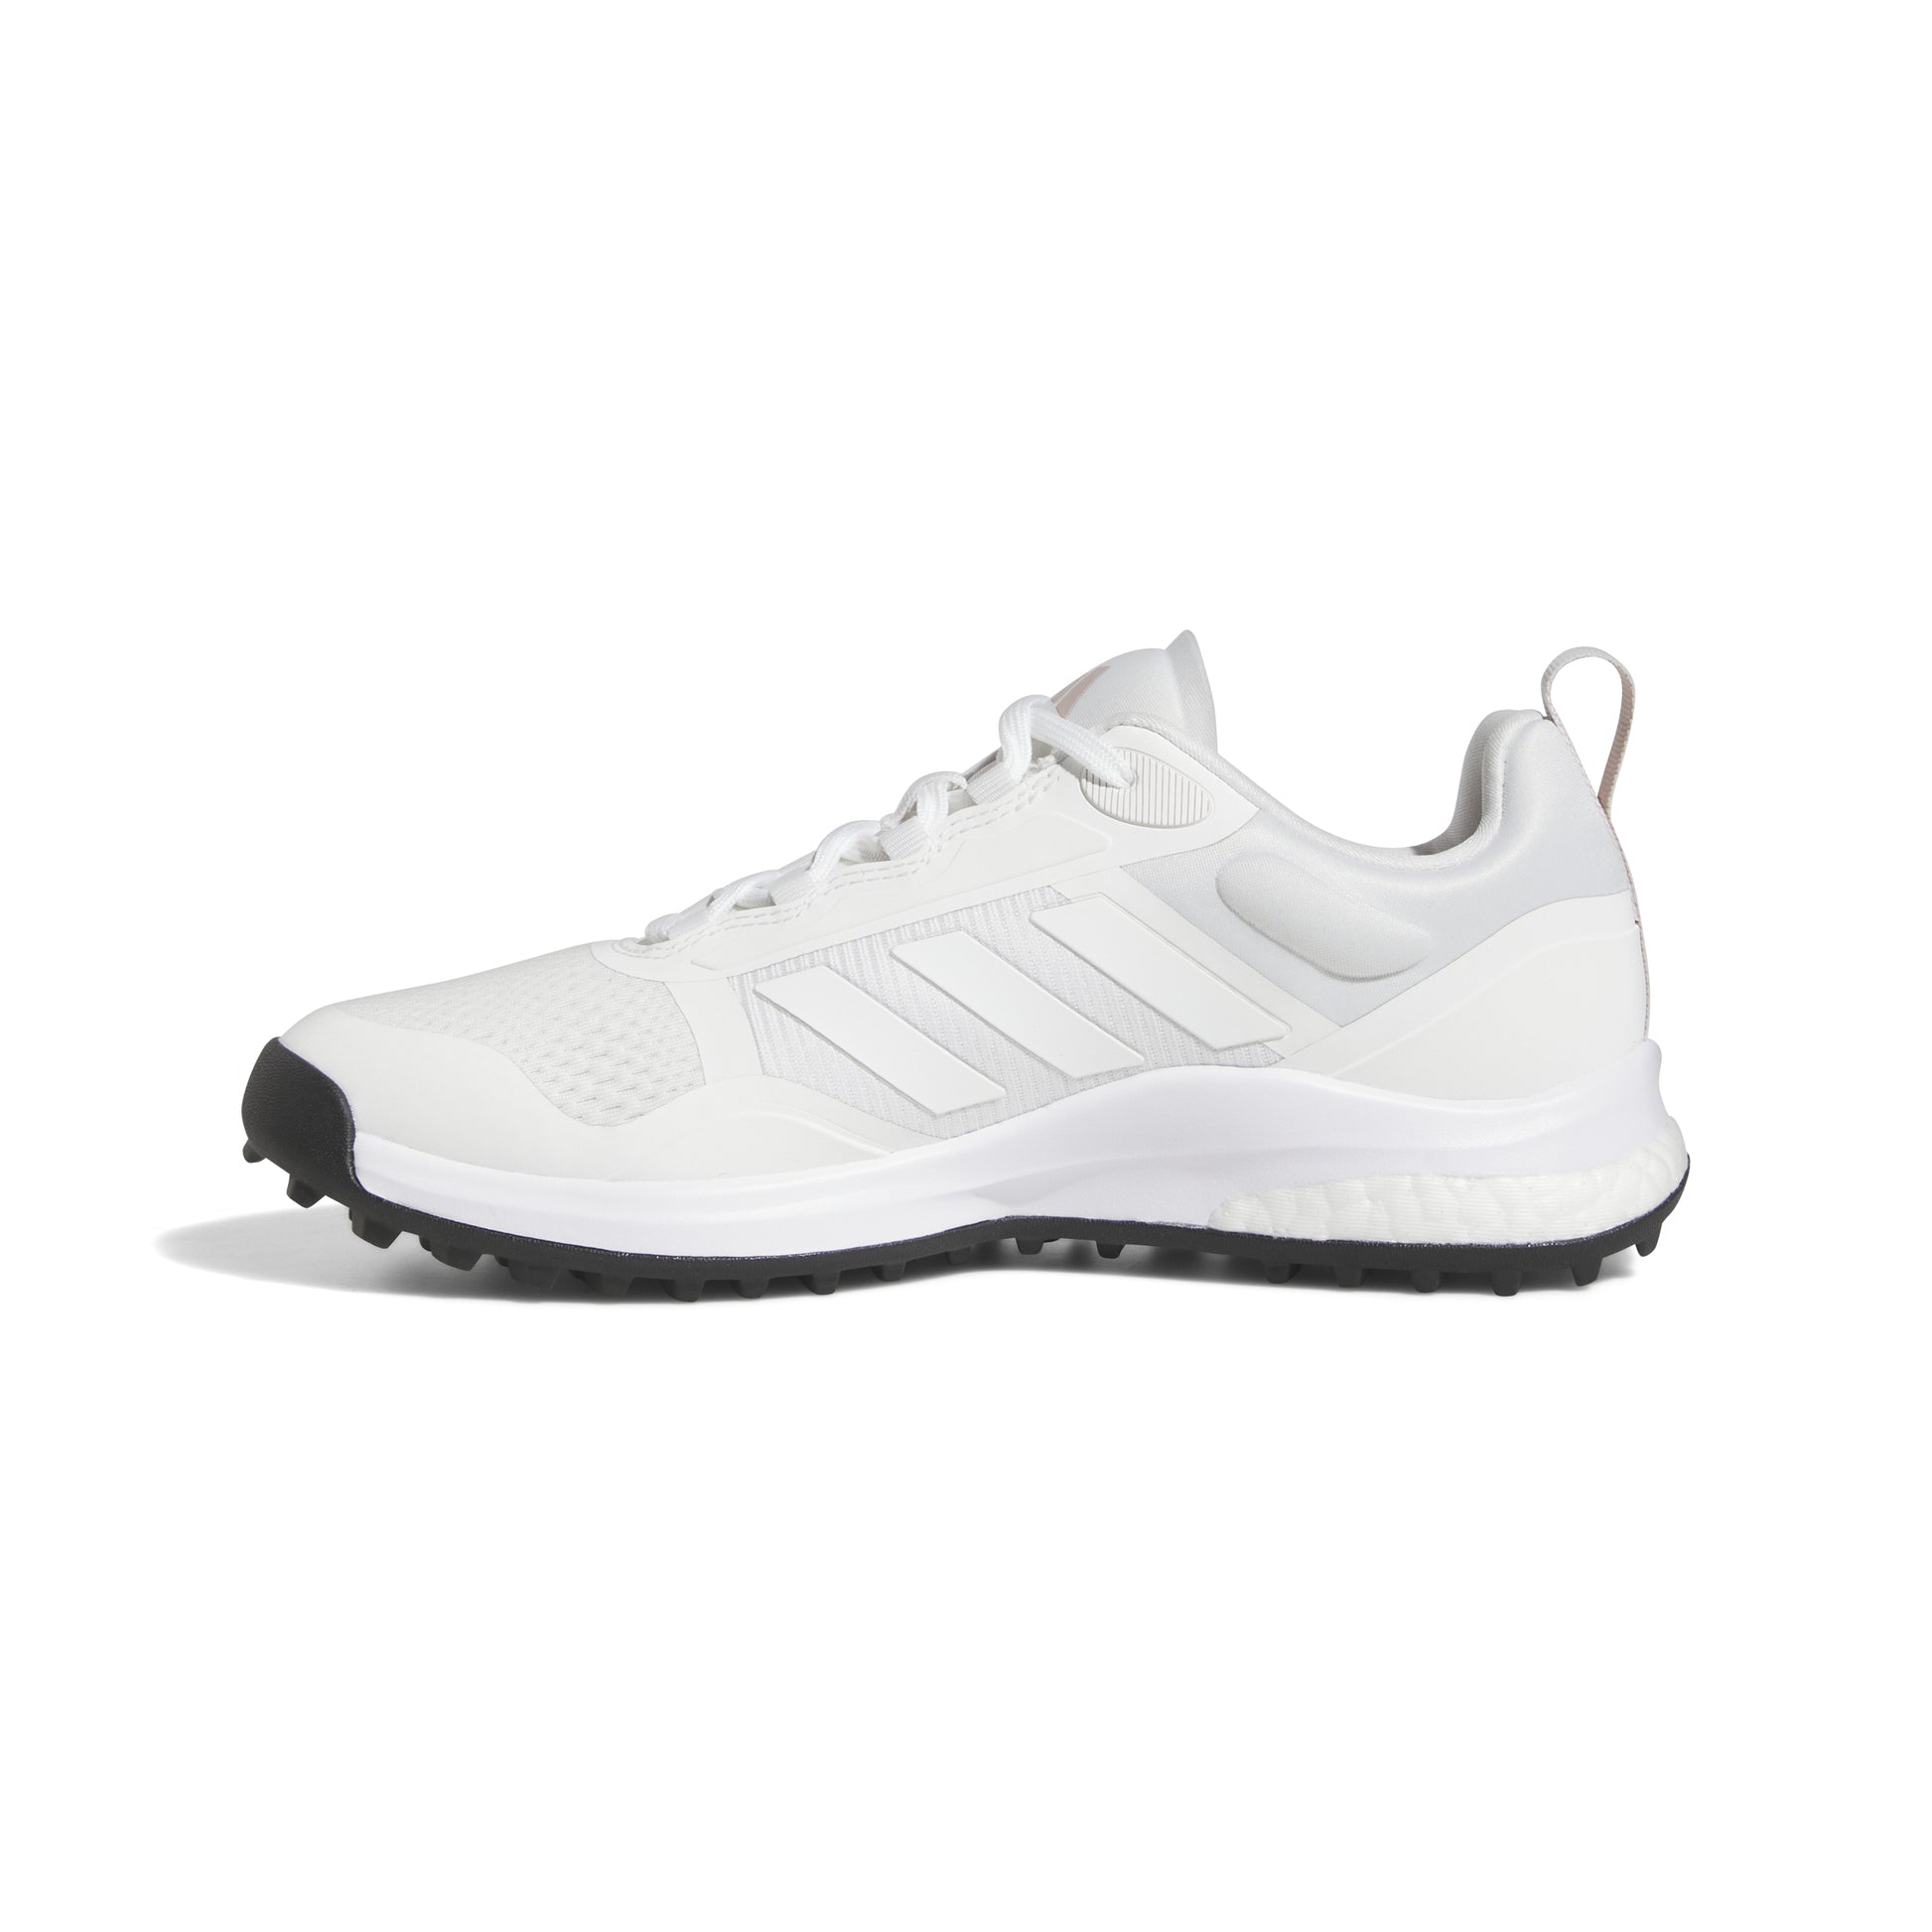 adidas Women's Spikeless Golf Shoe in White